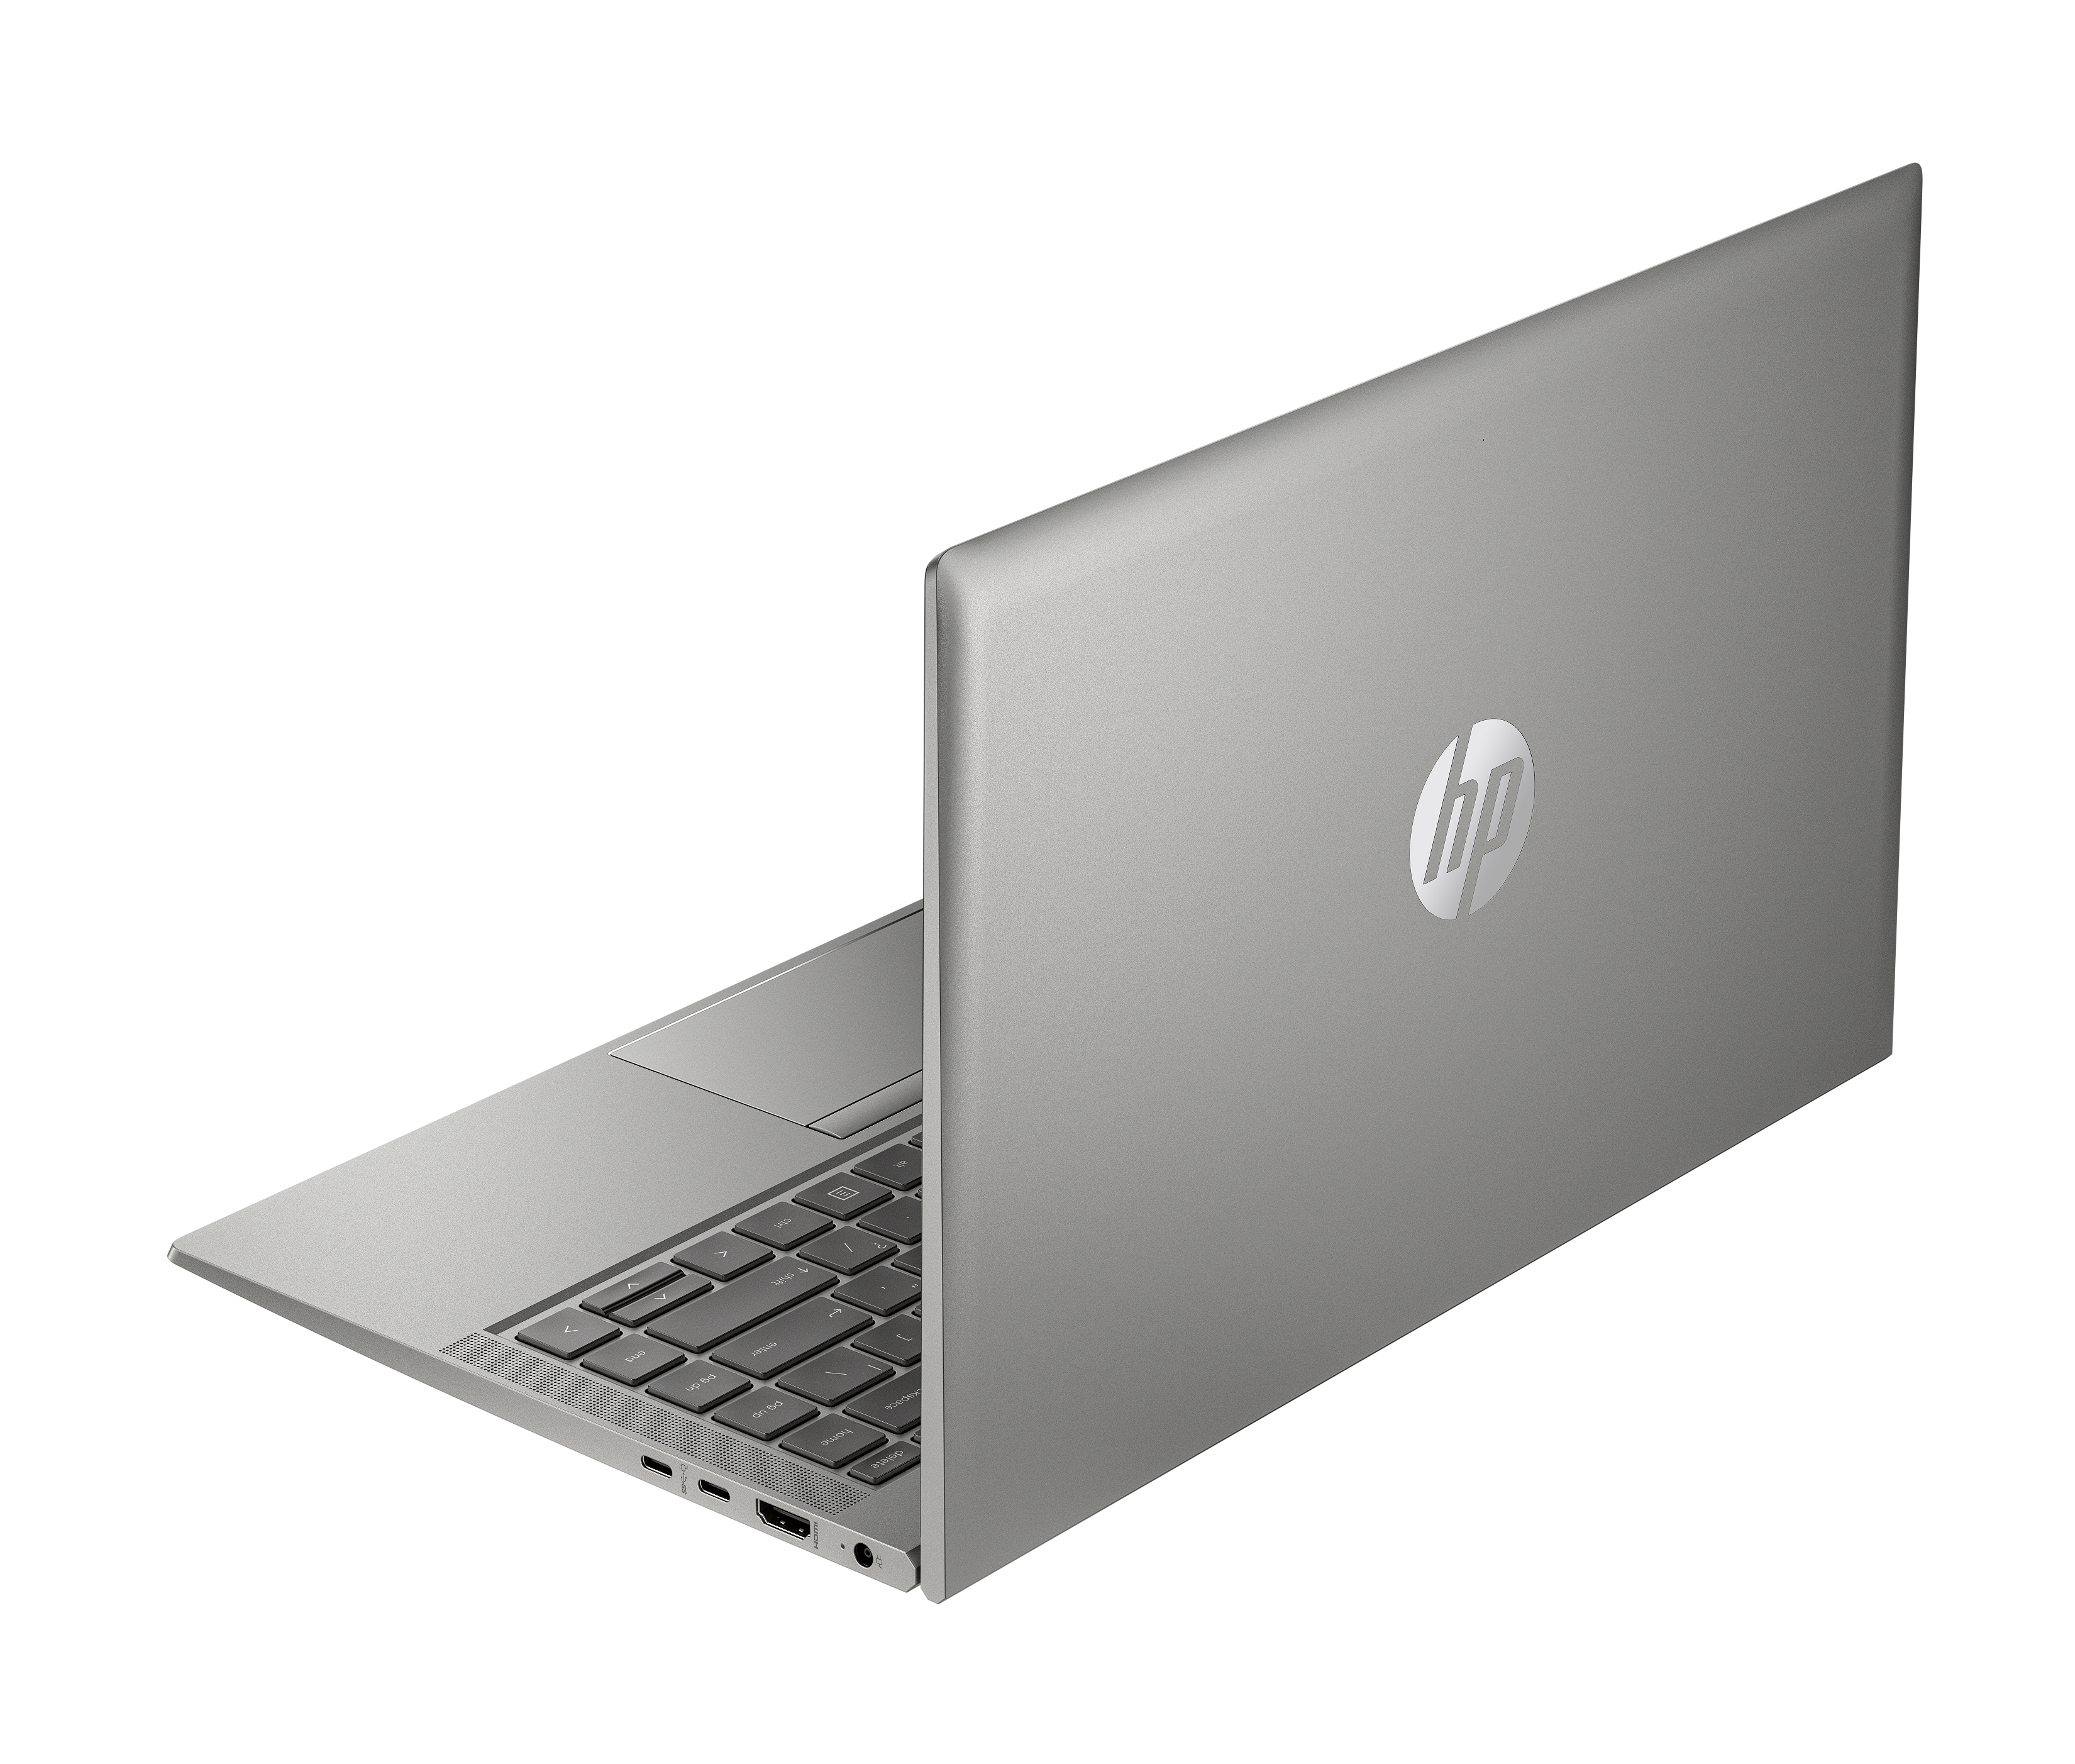 Kikker Onverbiddelijk keten HP releases its $1,099 Linux laptop for developers | Ars Technica